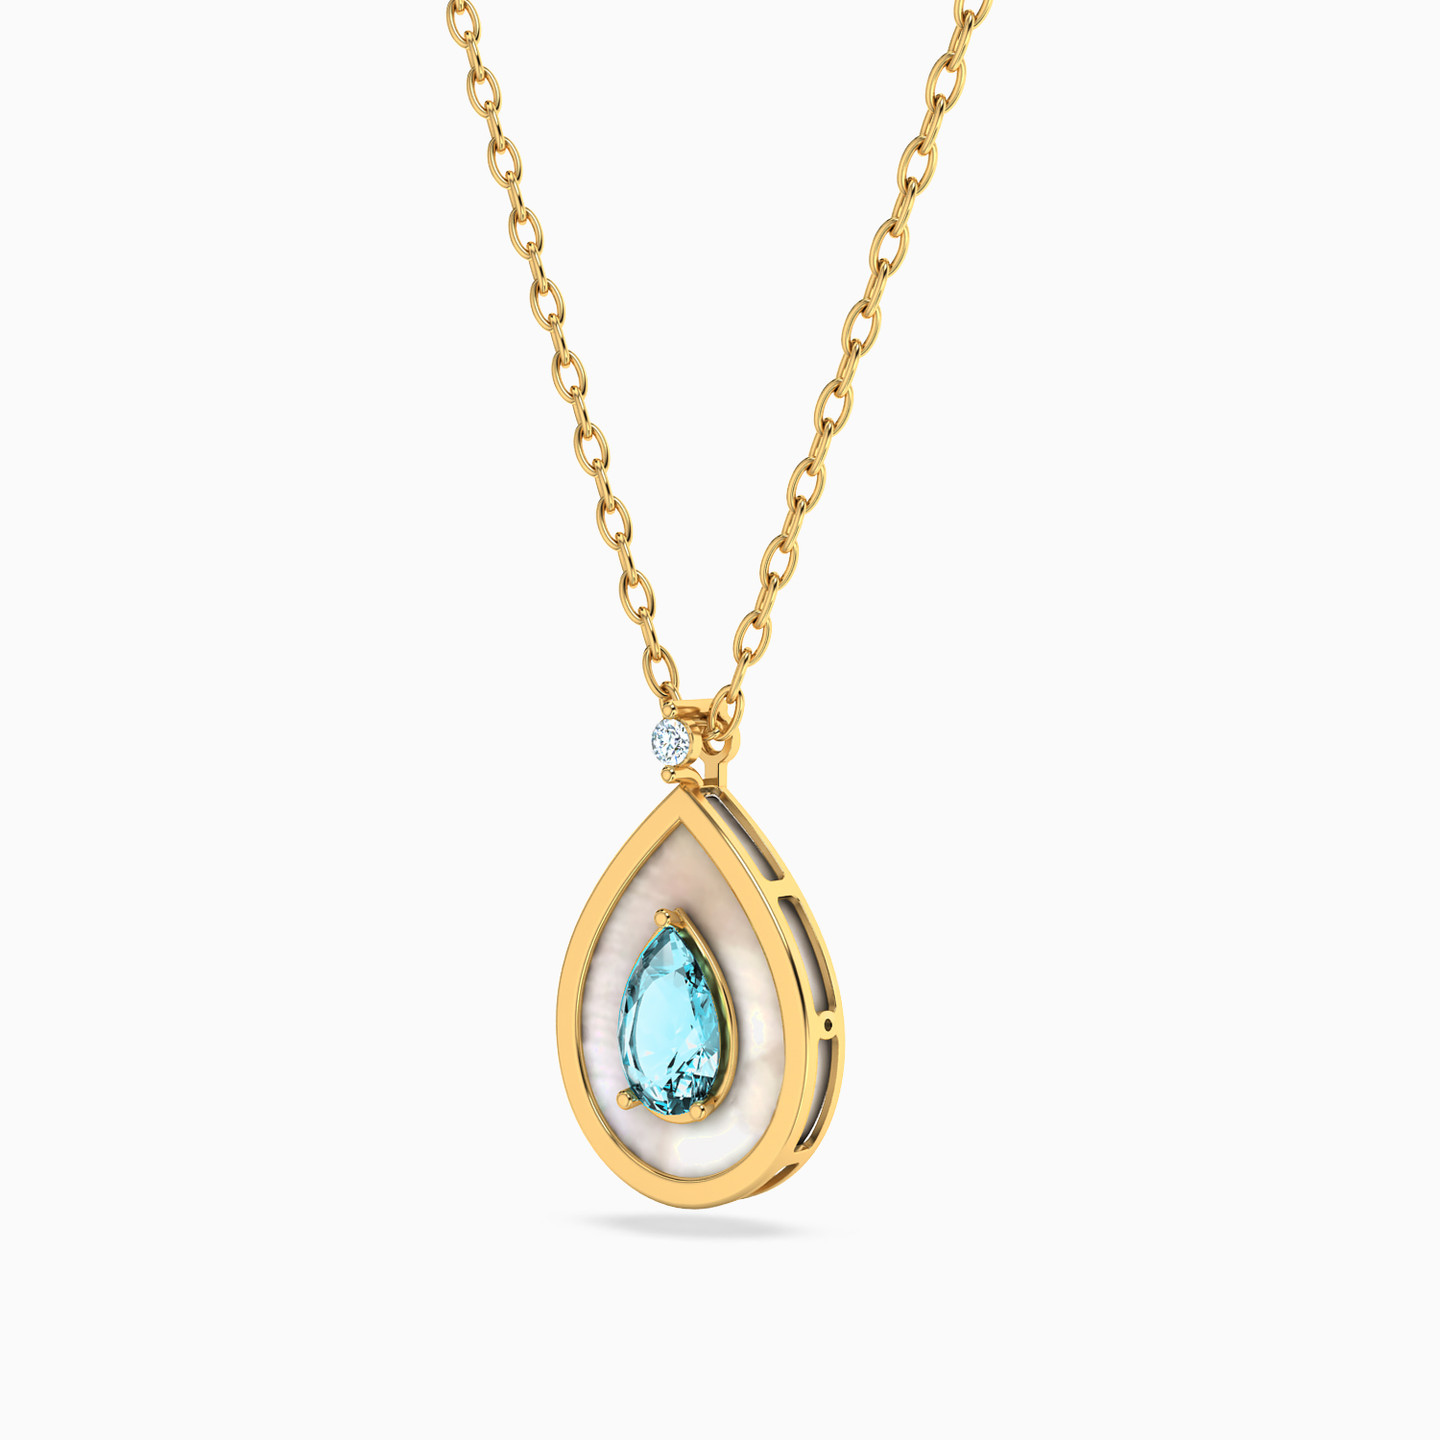 18K Gold Diamond & Colored Stones Pendant Necklace - 3